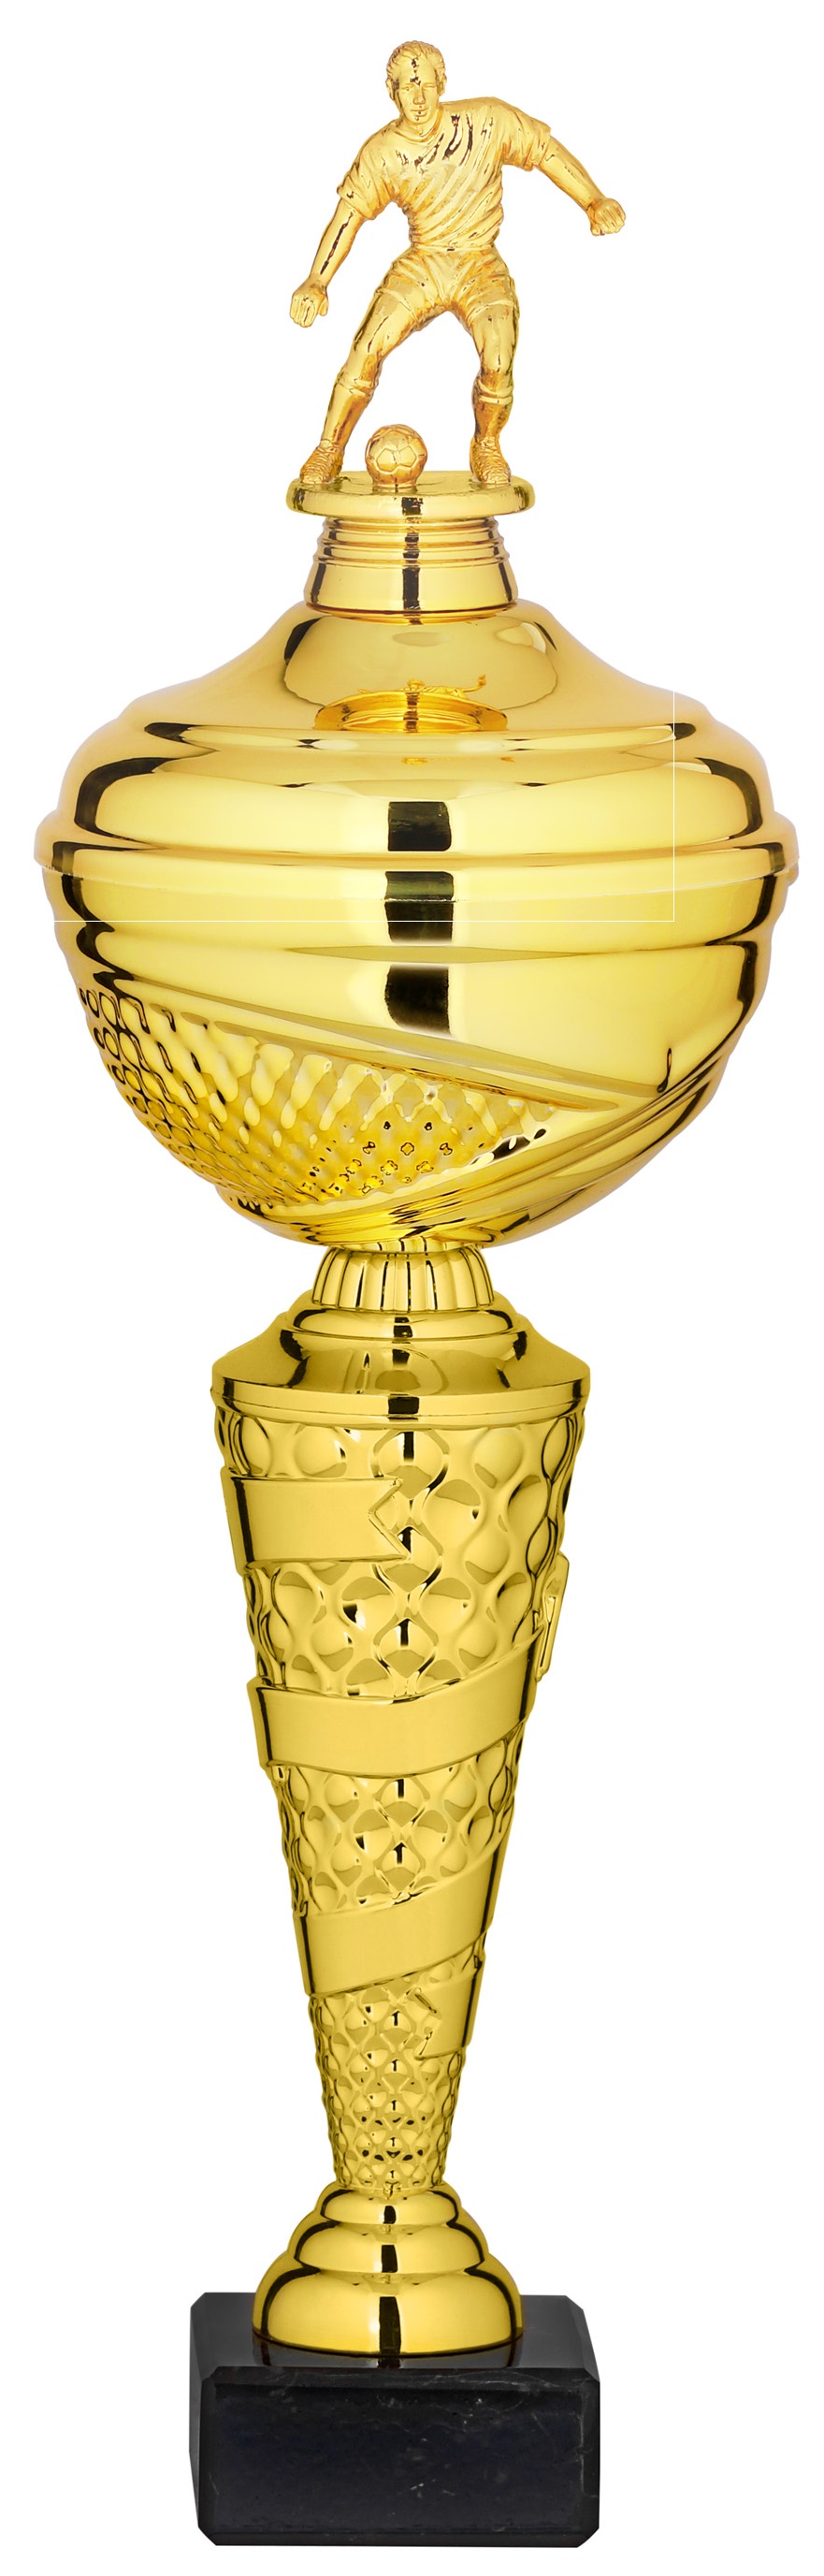 Fußball-Pokal P600-Gold  inkl. Gravur  39,5 cm